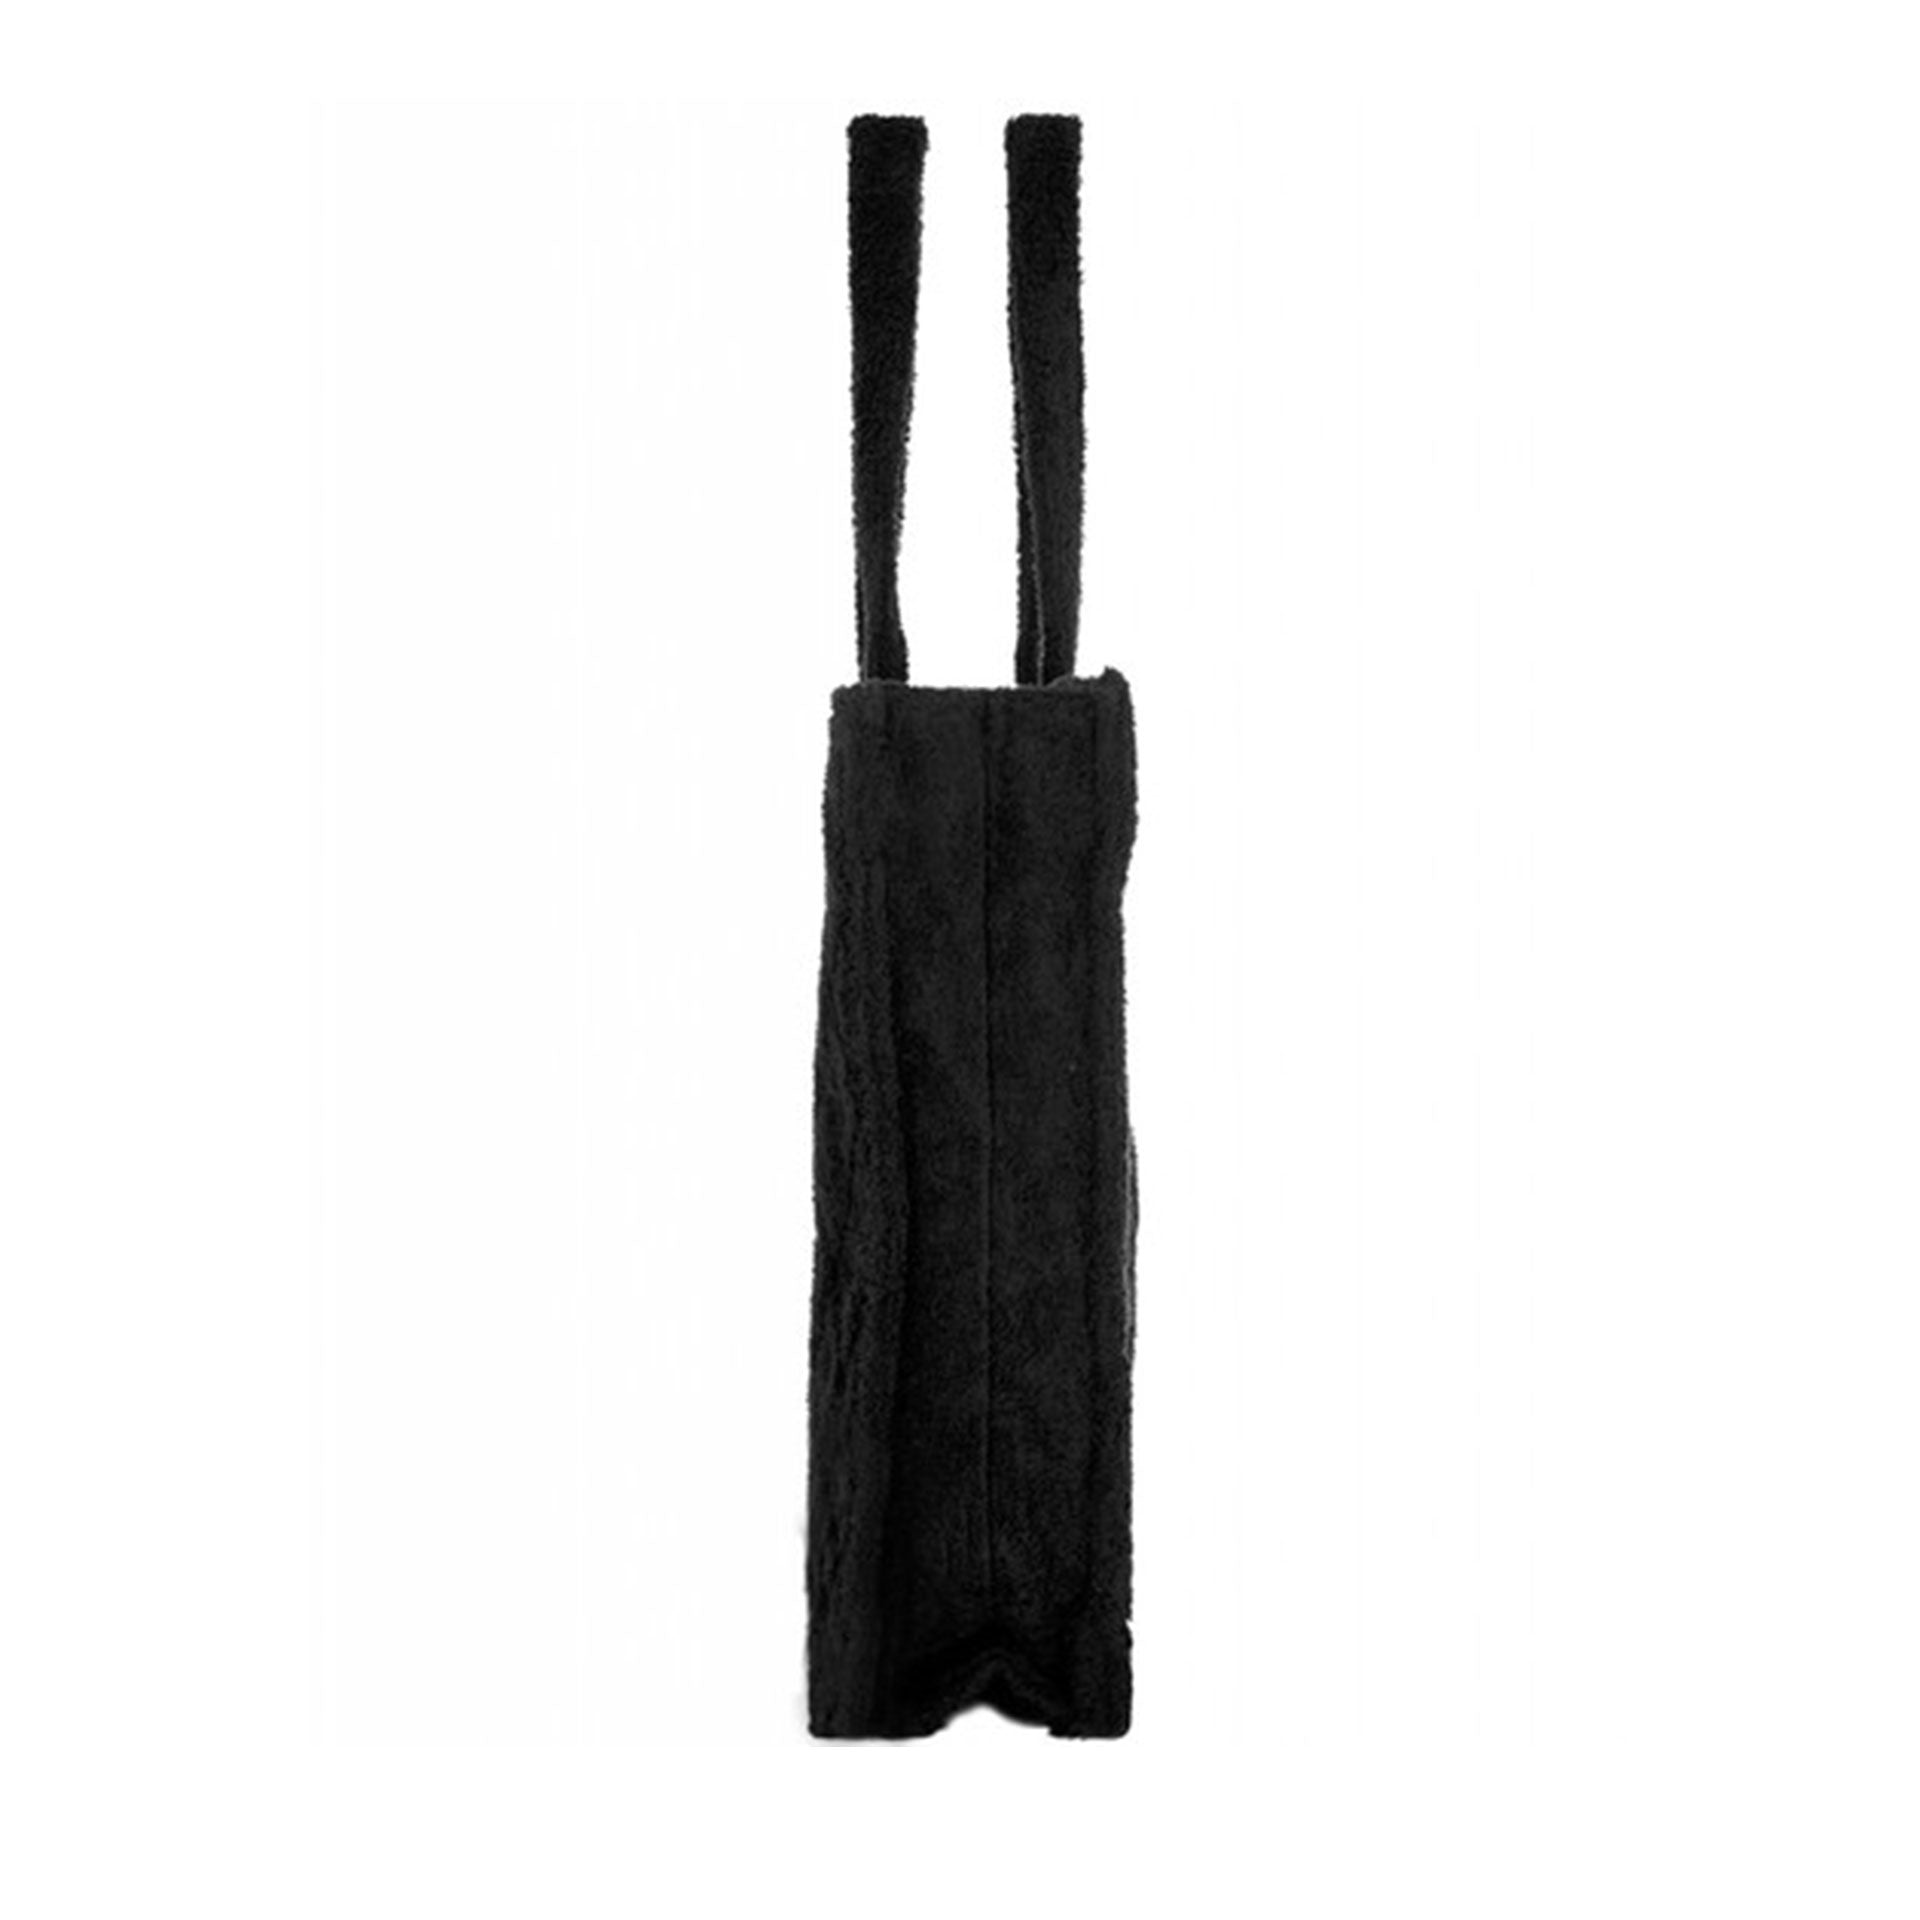 Chanel Timeless Vintage Cc Tote Towel Rare Piece Black Terry Cloth Beach Bag